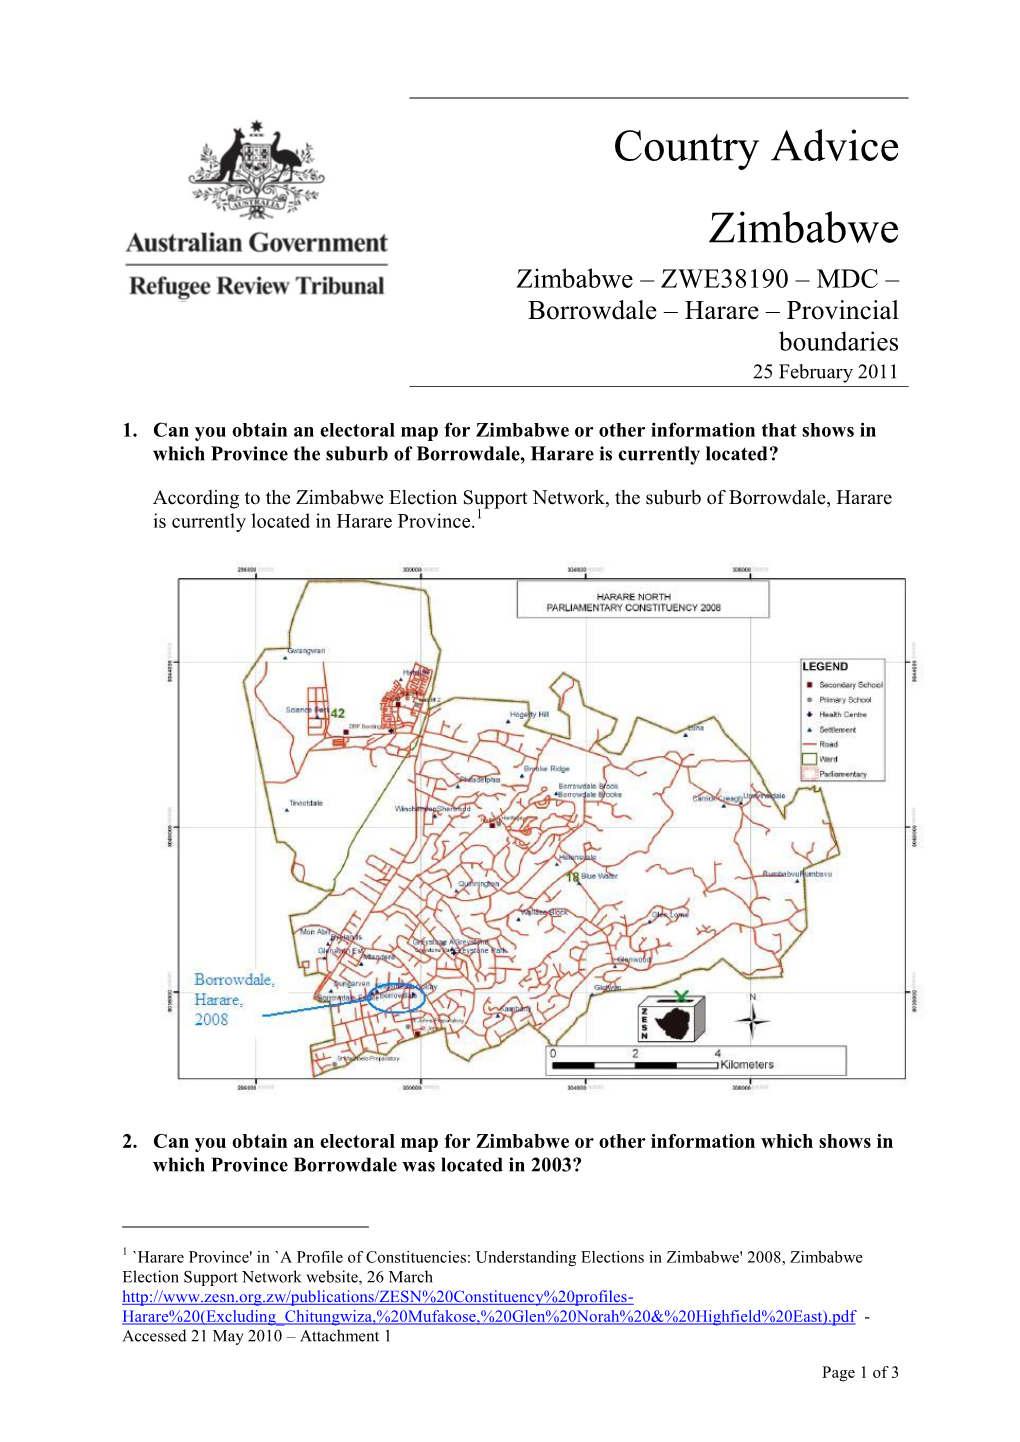 Borrowdale – Harare – Provincial Boundaries 25 February 2011